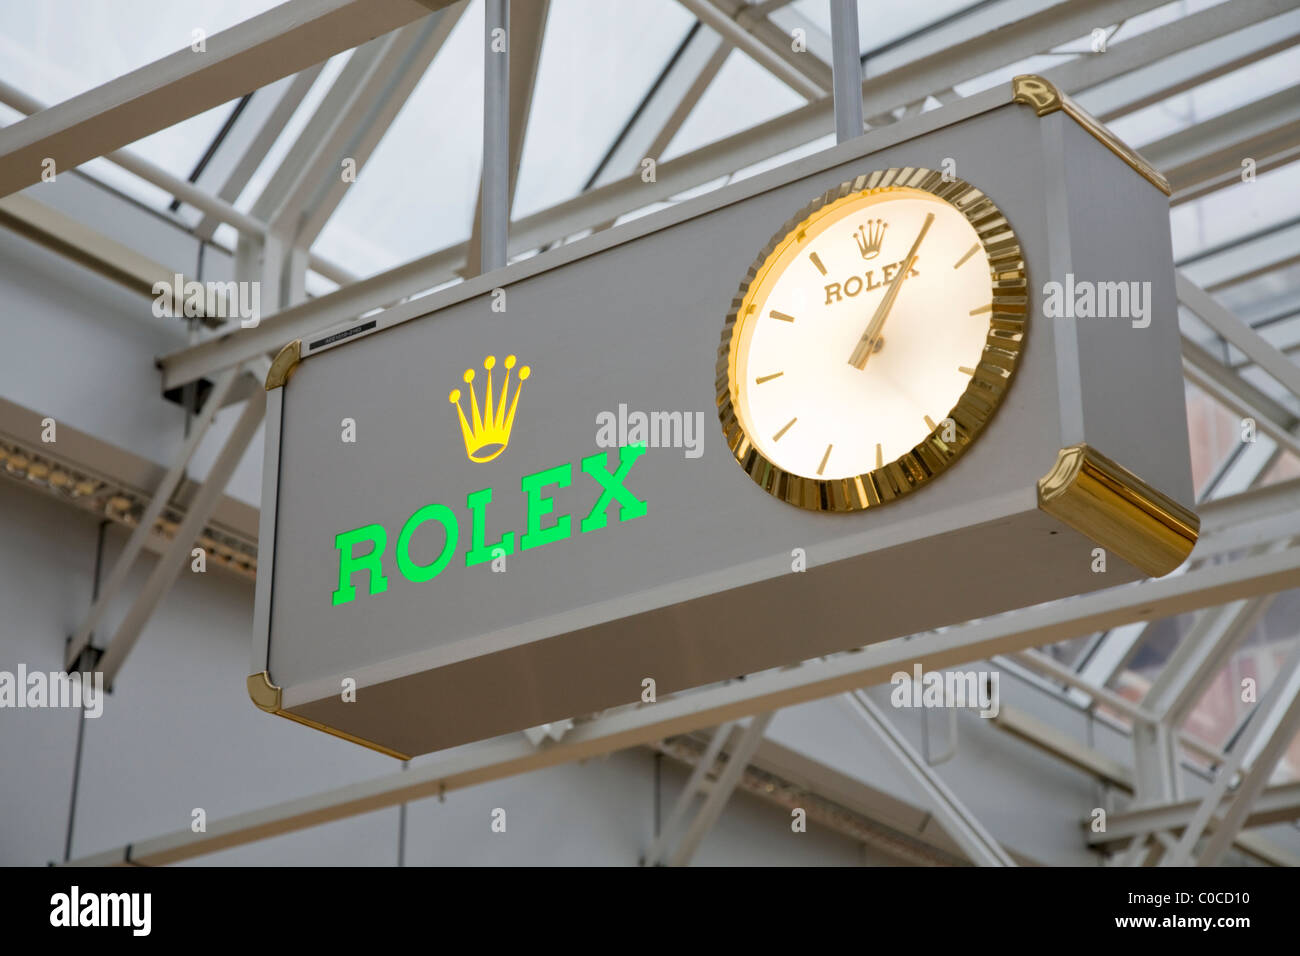 Display advertising orologio Rolex marca di orologi. Terminal internazionale sala partenze, Ginevra / Aeroporto Geneve, Svizzera Foto Stock